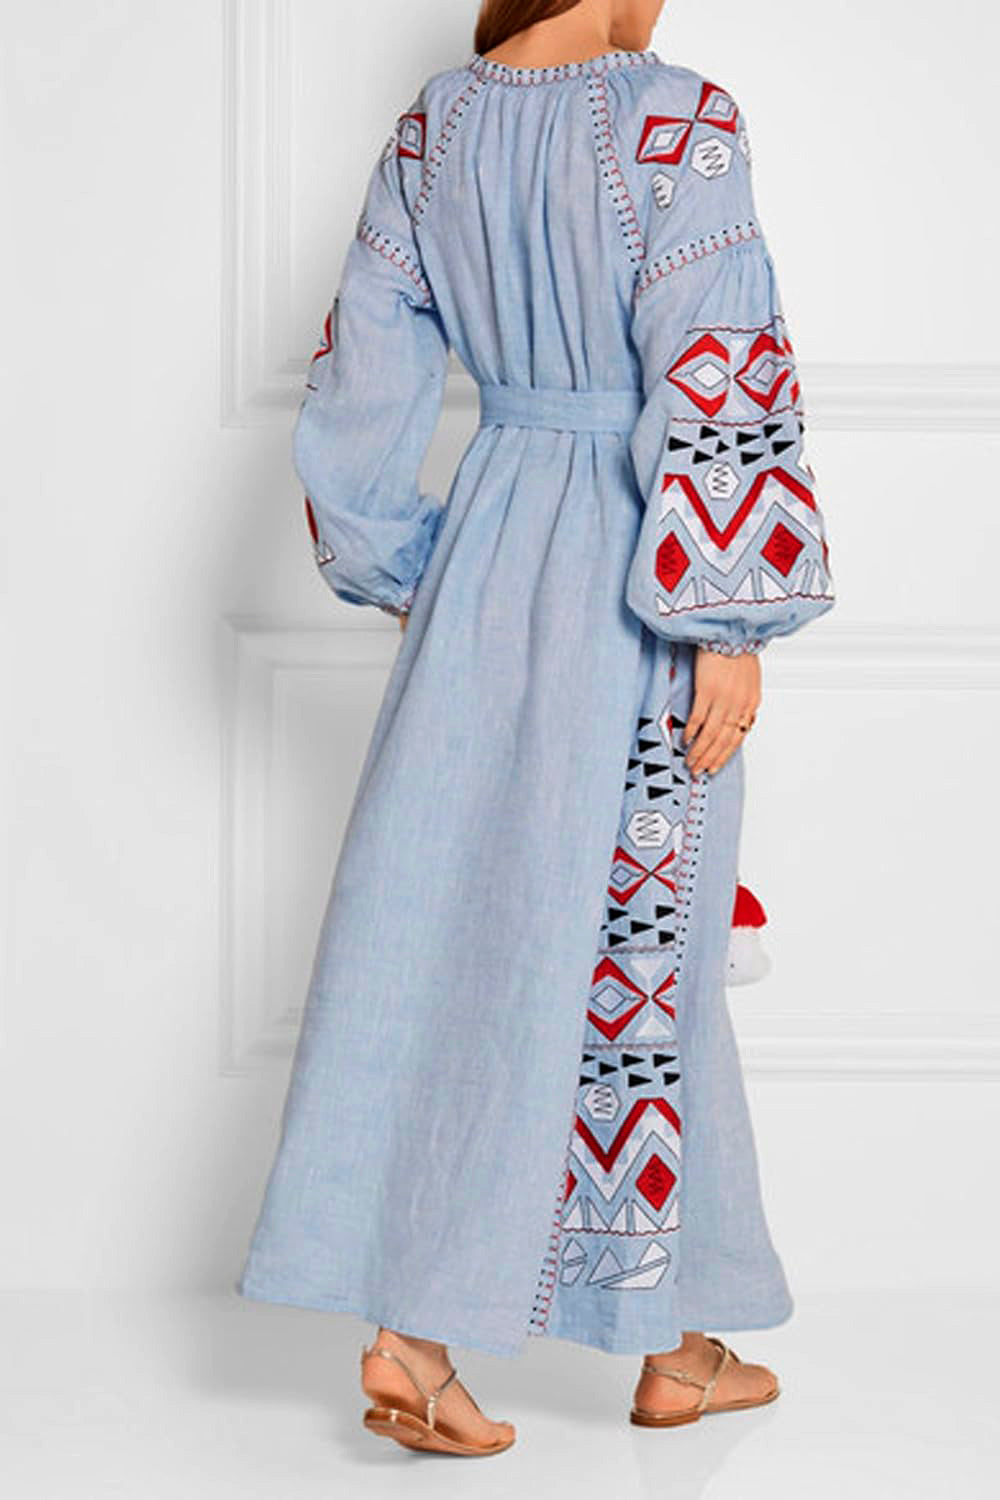 Bohemian embroidered dress Ukrainian vyshyvanka Kilim